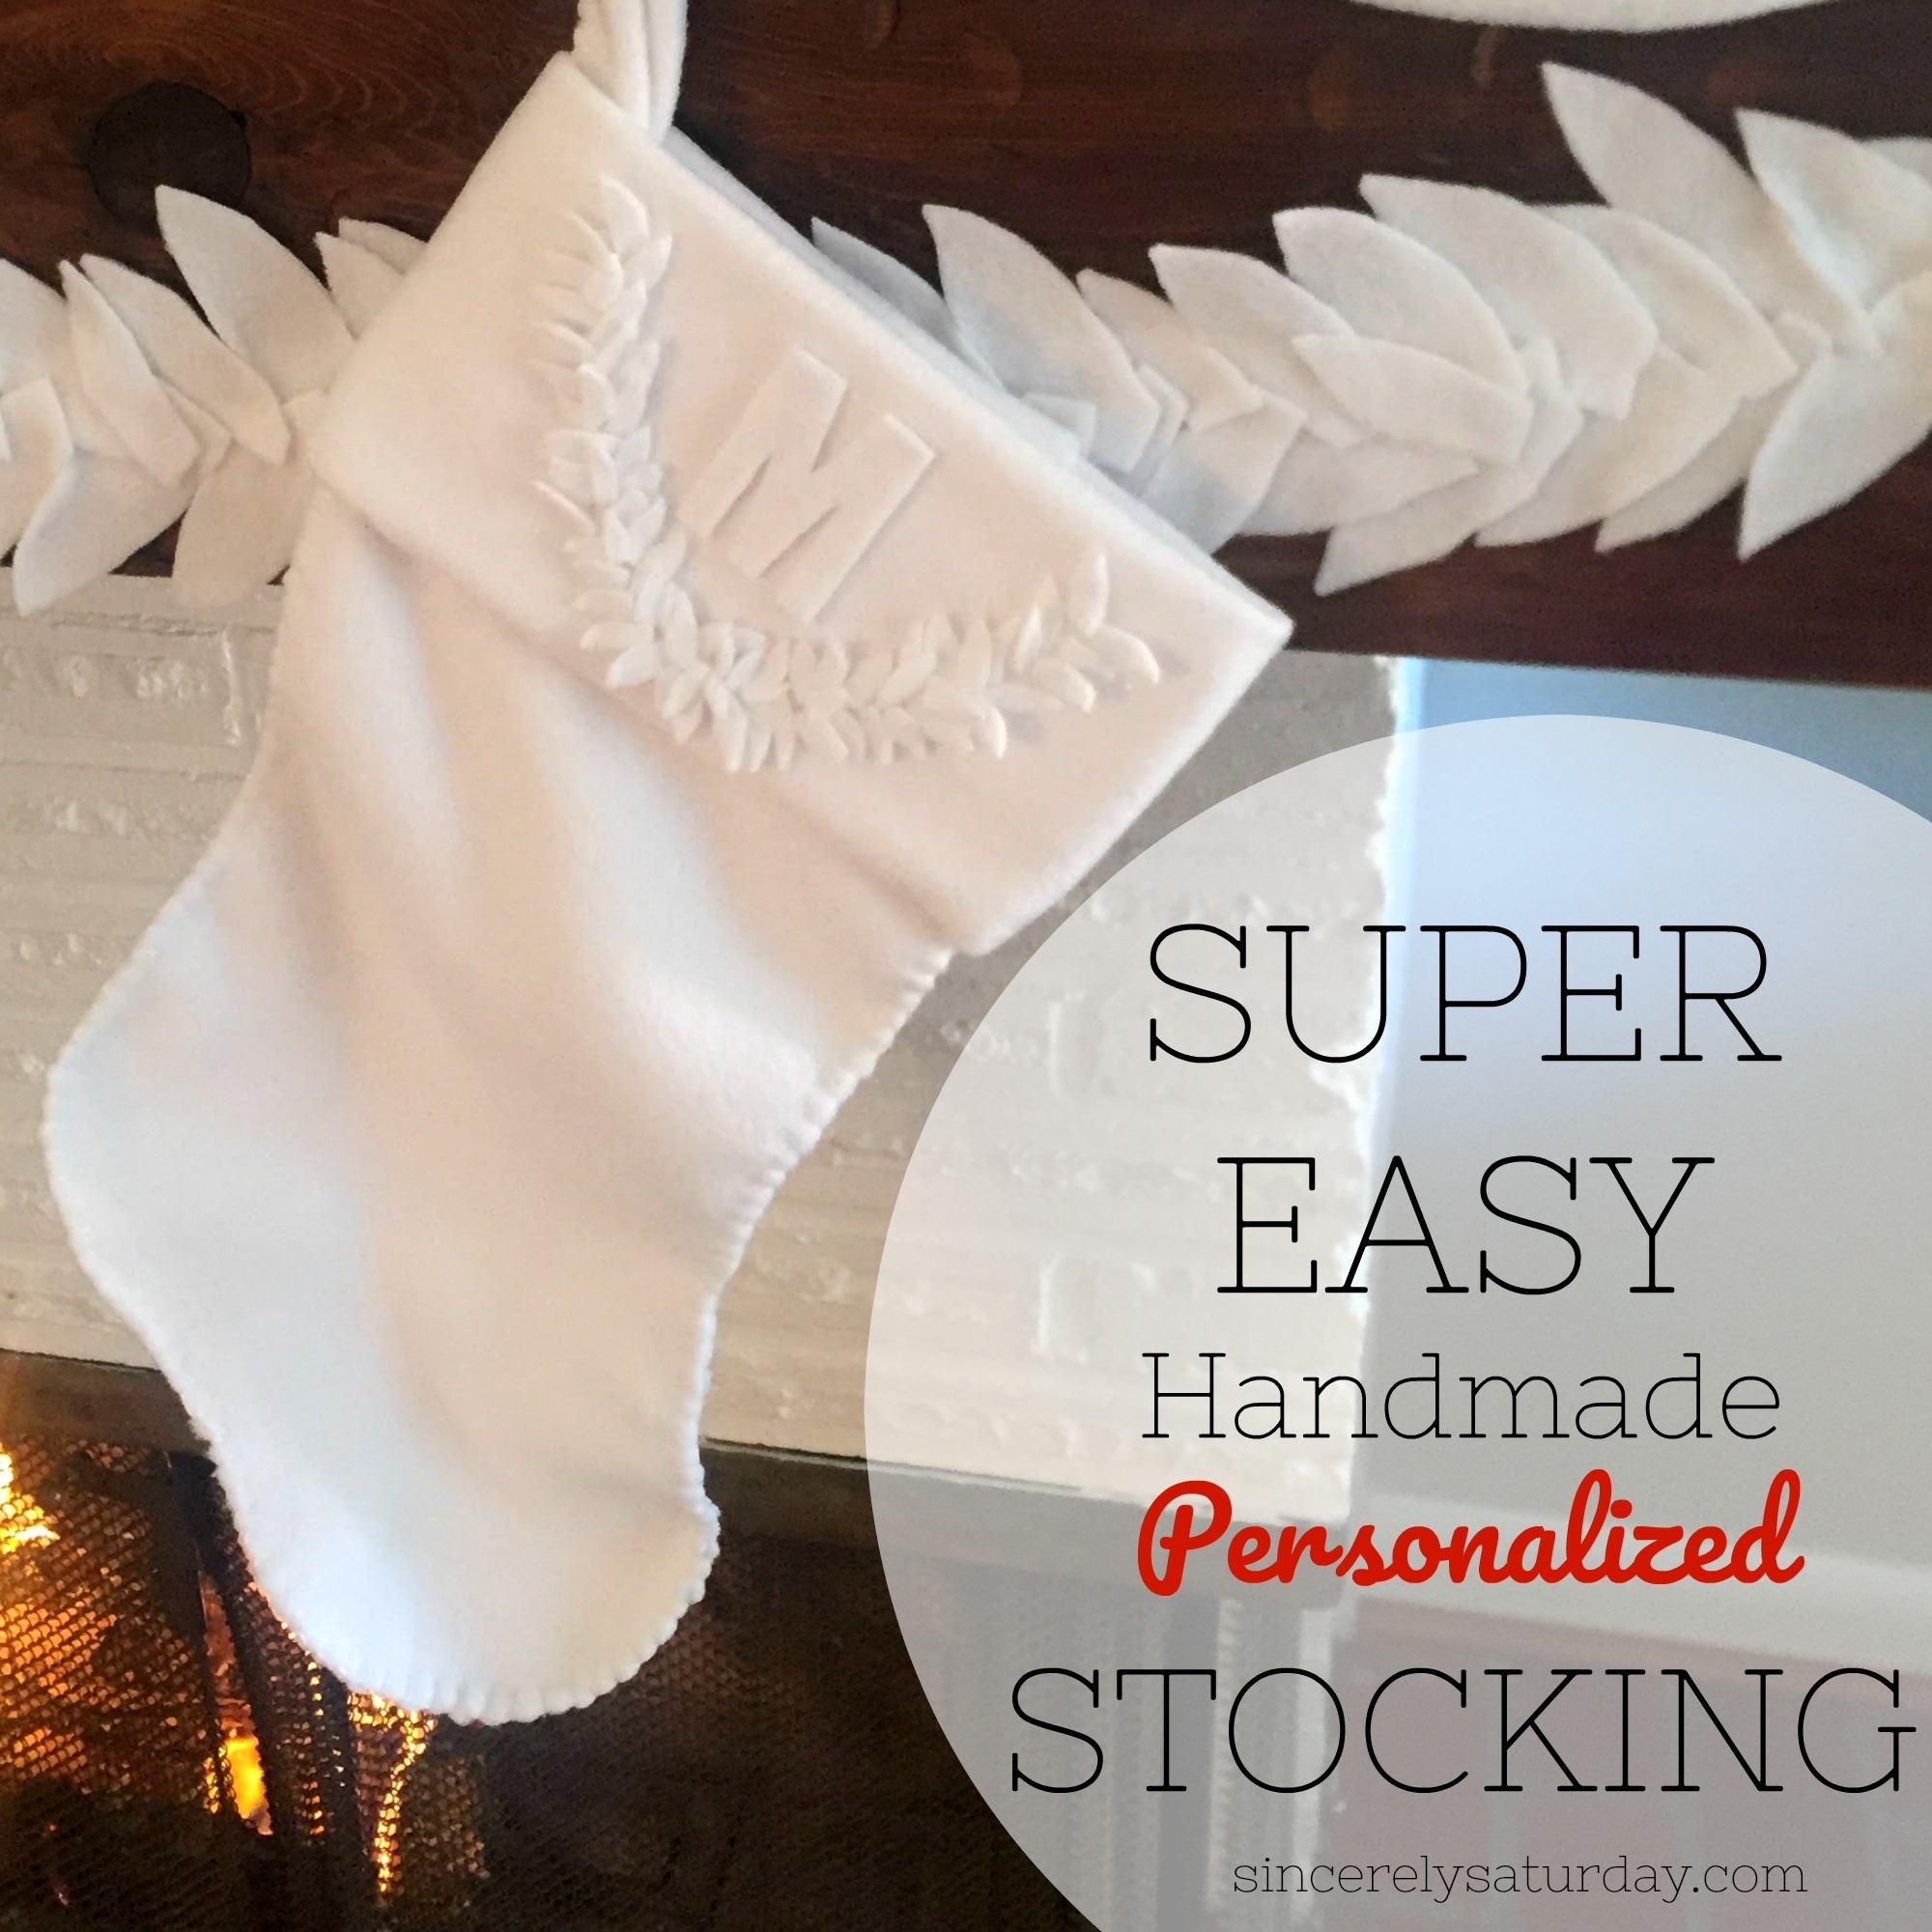 Super easy handmade personalized stocking